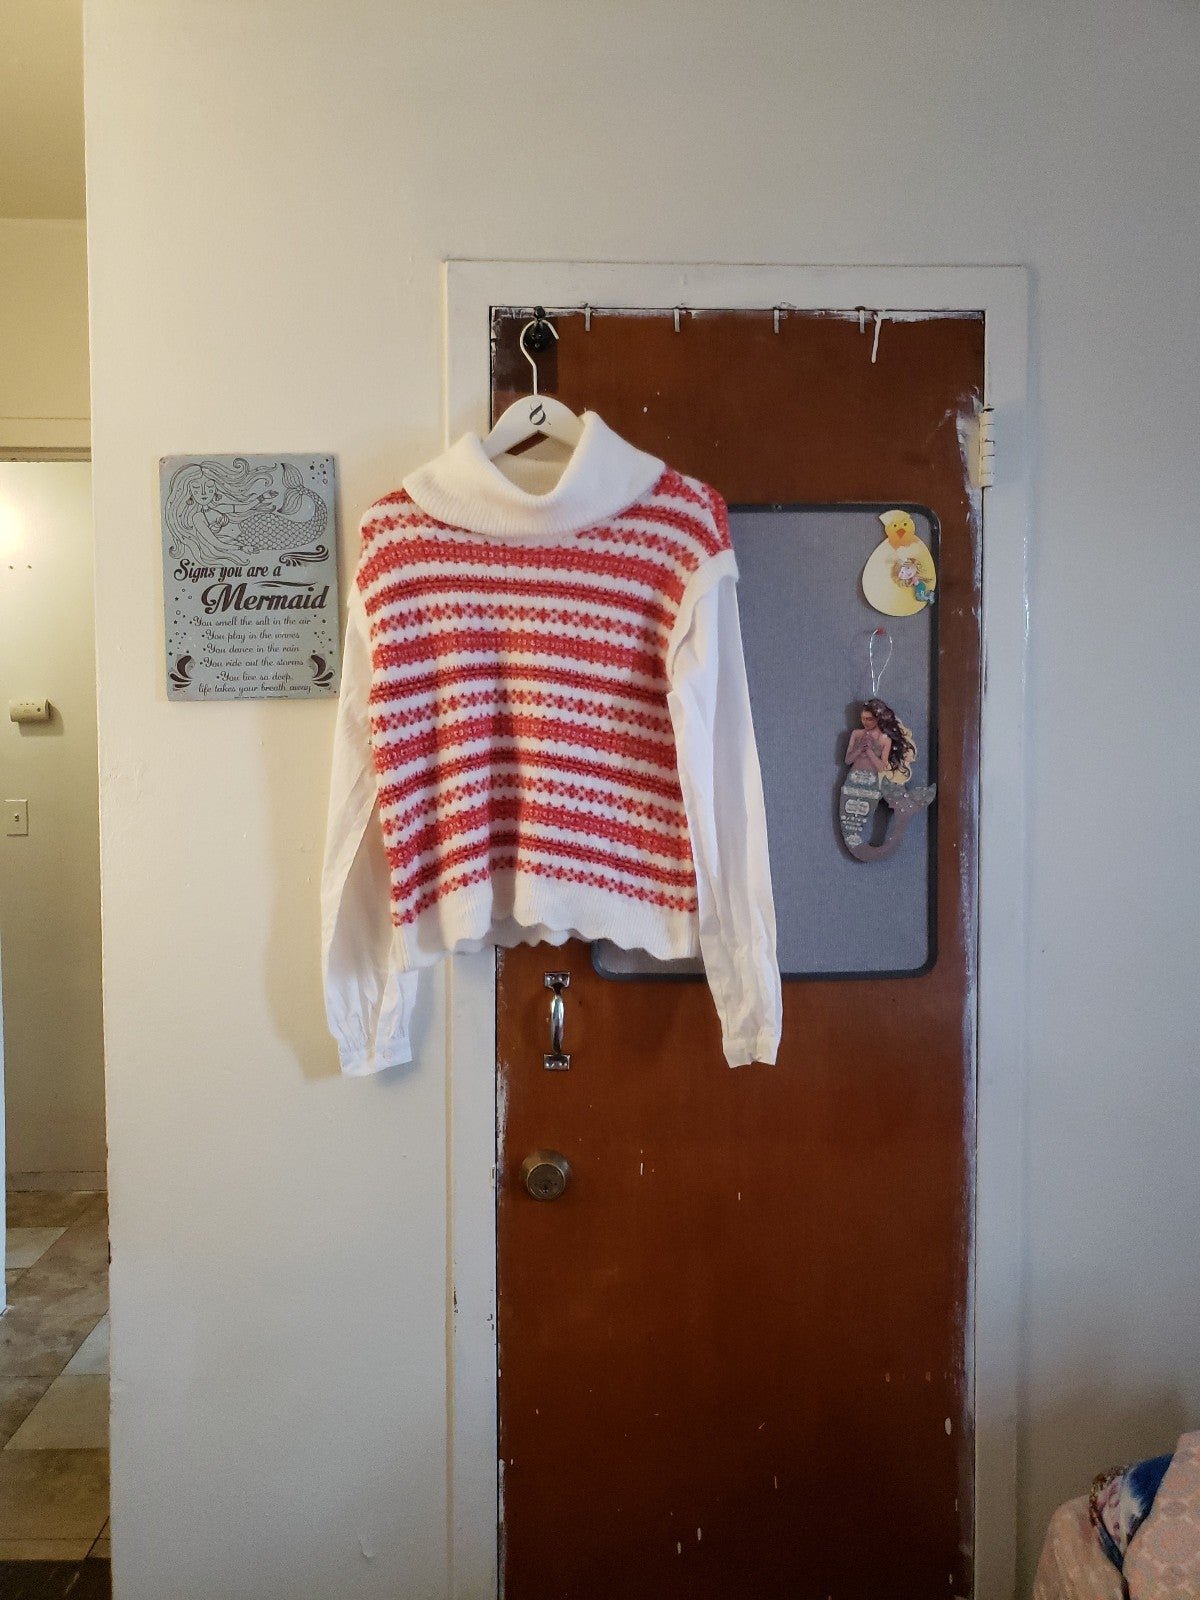 Discounted Loft sweater size Medium fRCo177ge Cheap